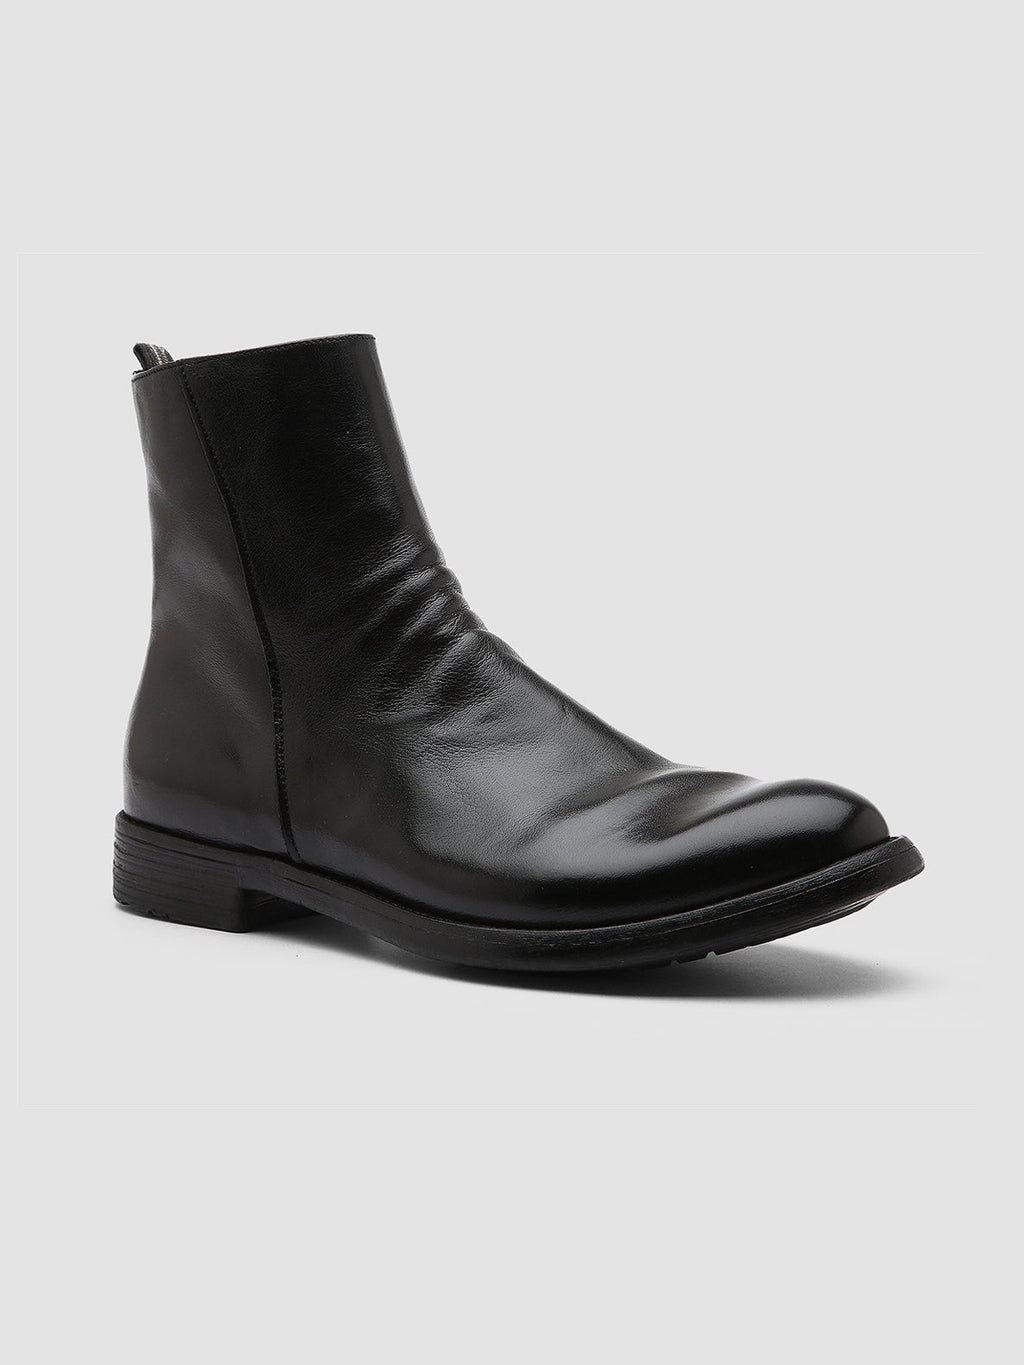 HIVE 010 - Black Leather Boots Men Officine Creative - 3